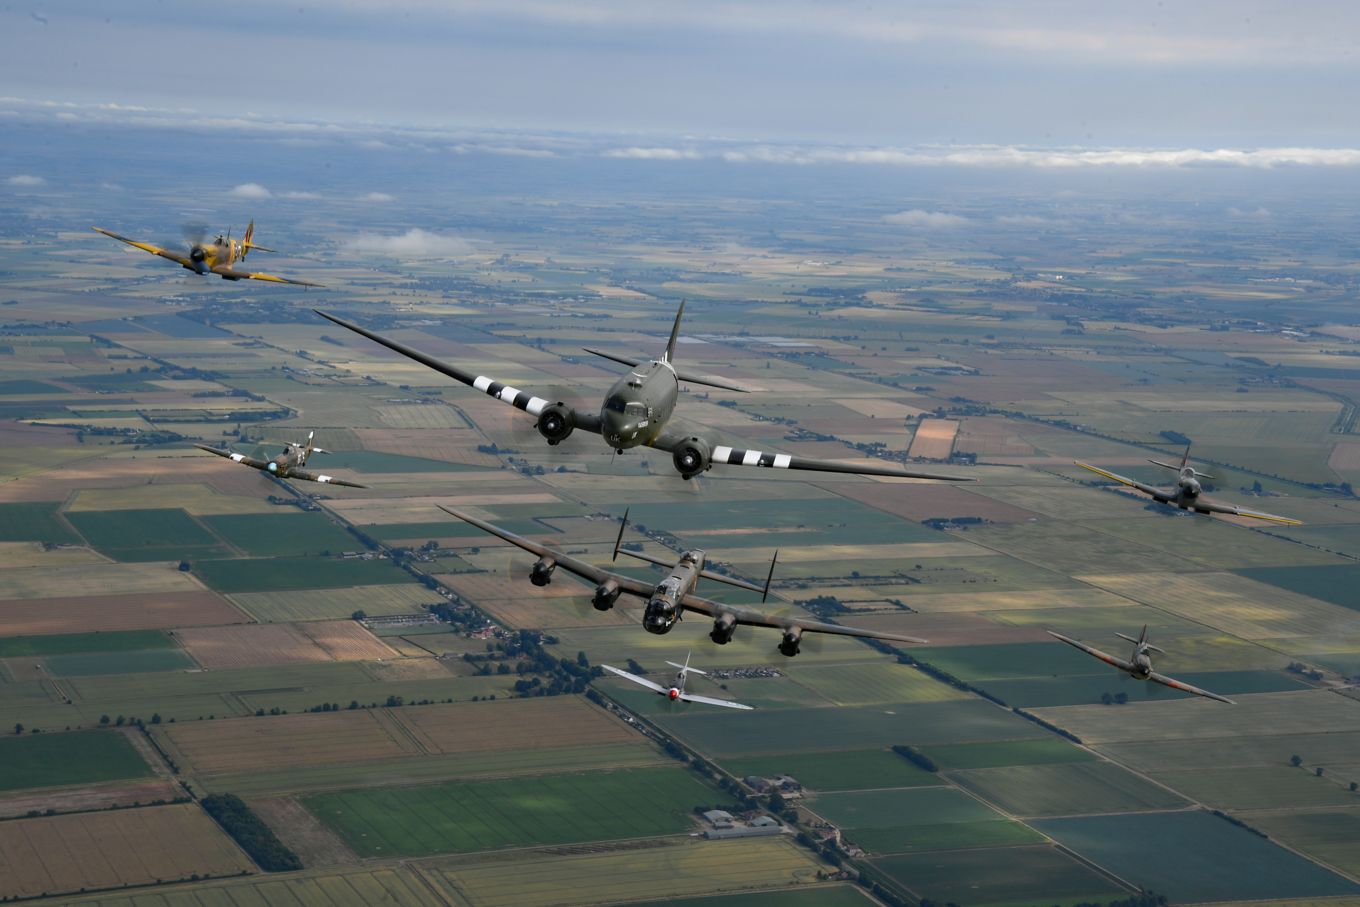 Dakota, Lancaster, 3 Spitfires and 2 Hurricanes display flying